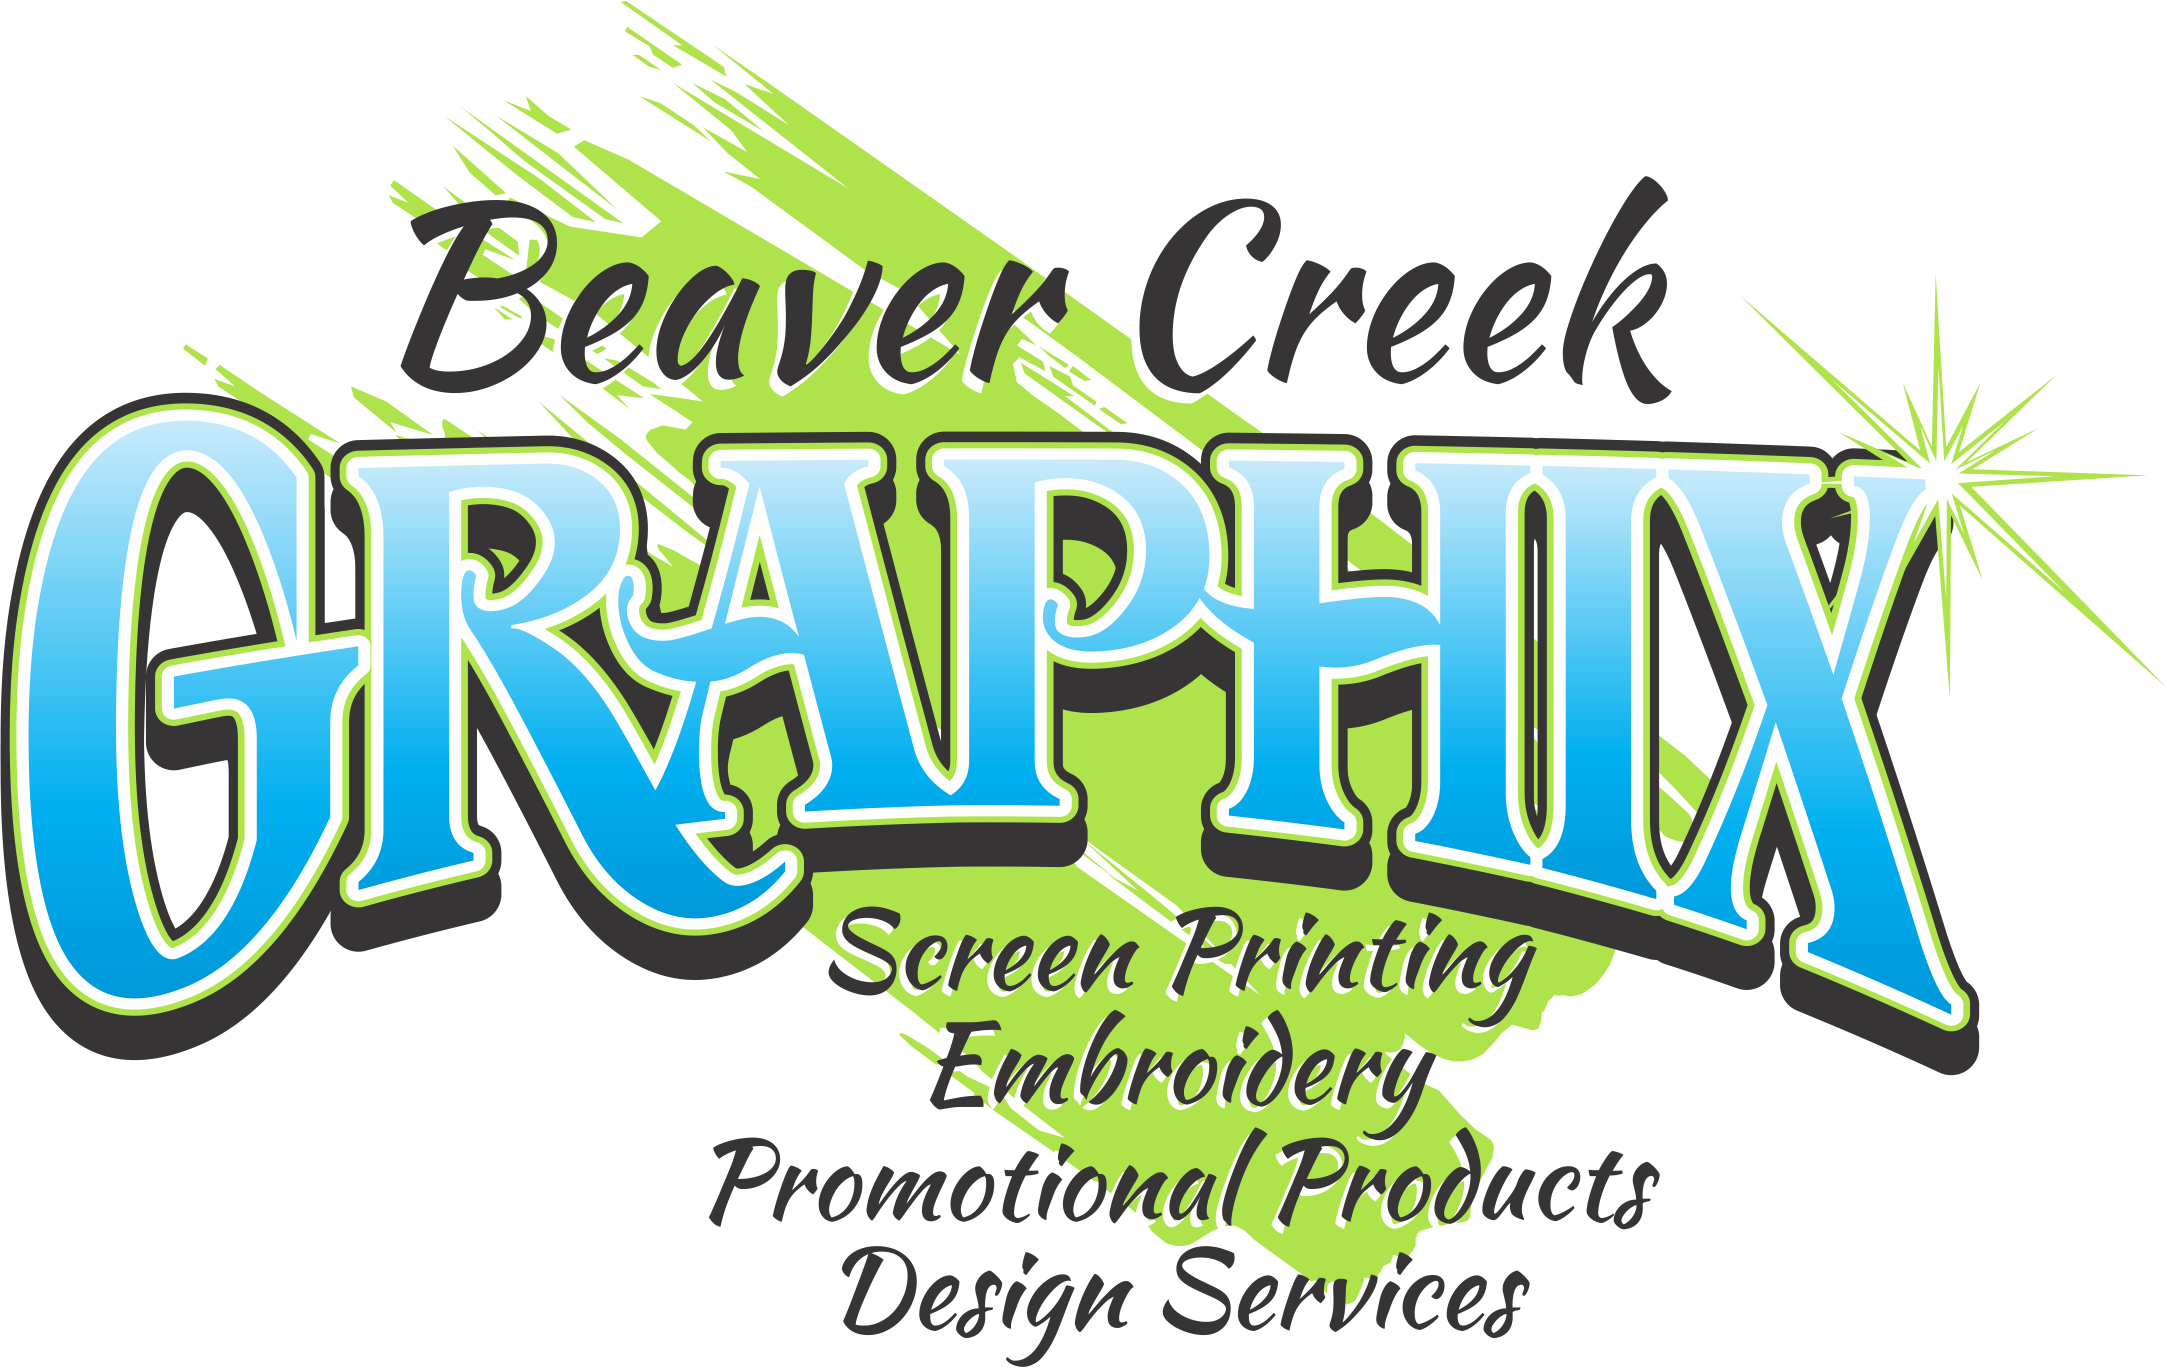 Beaver Creek Graphix's Logo